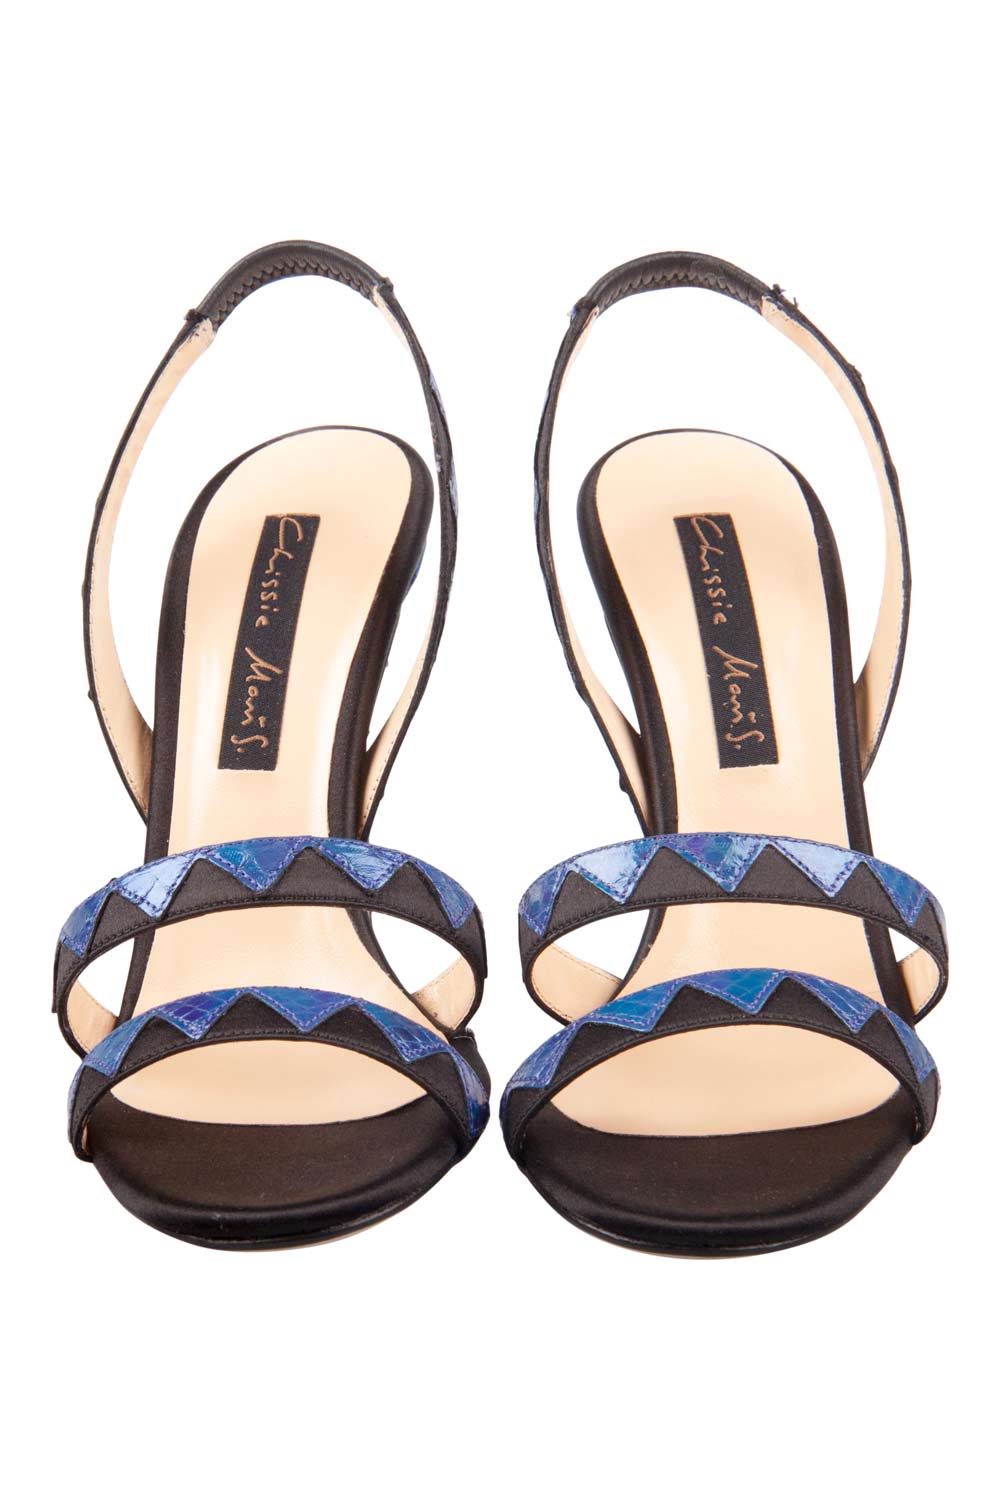 

Chrissie Morris Metallic Blue Python Leather Trim And Satin Slingback Open Toe Sandals Size